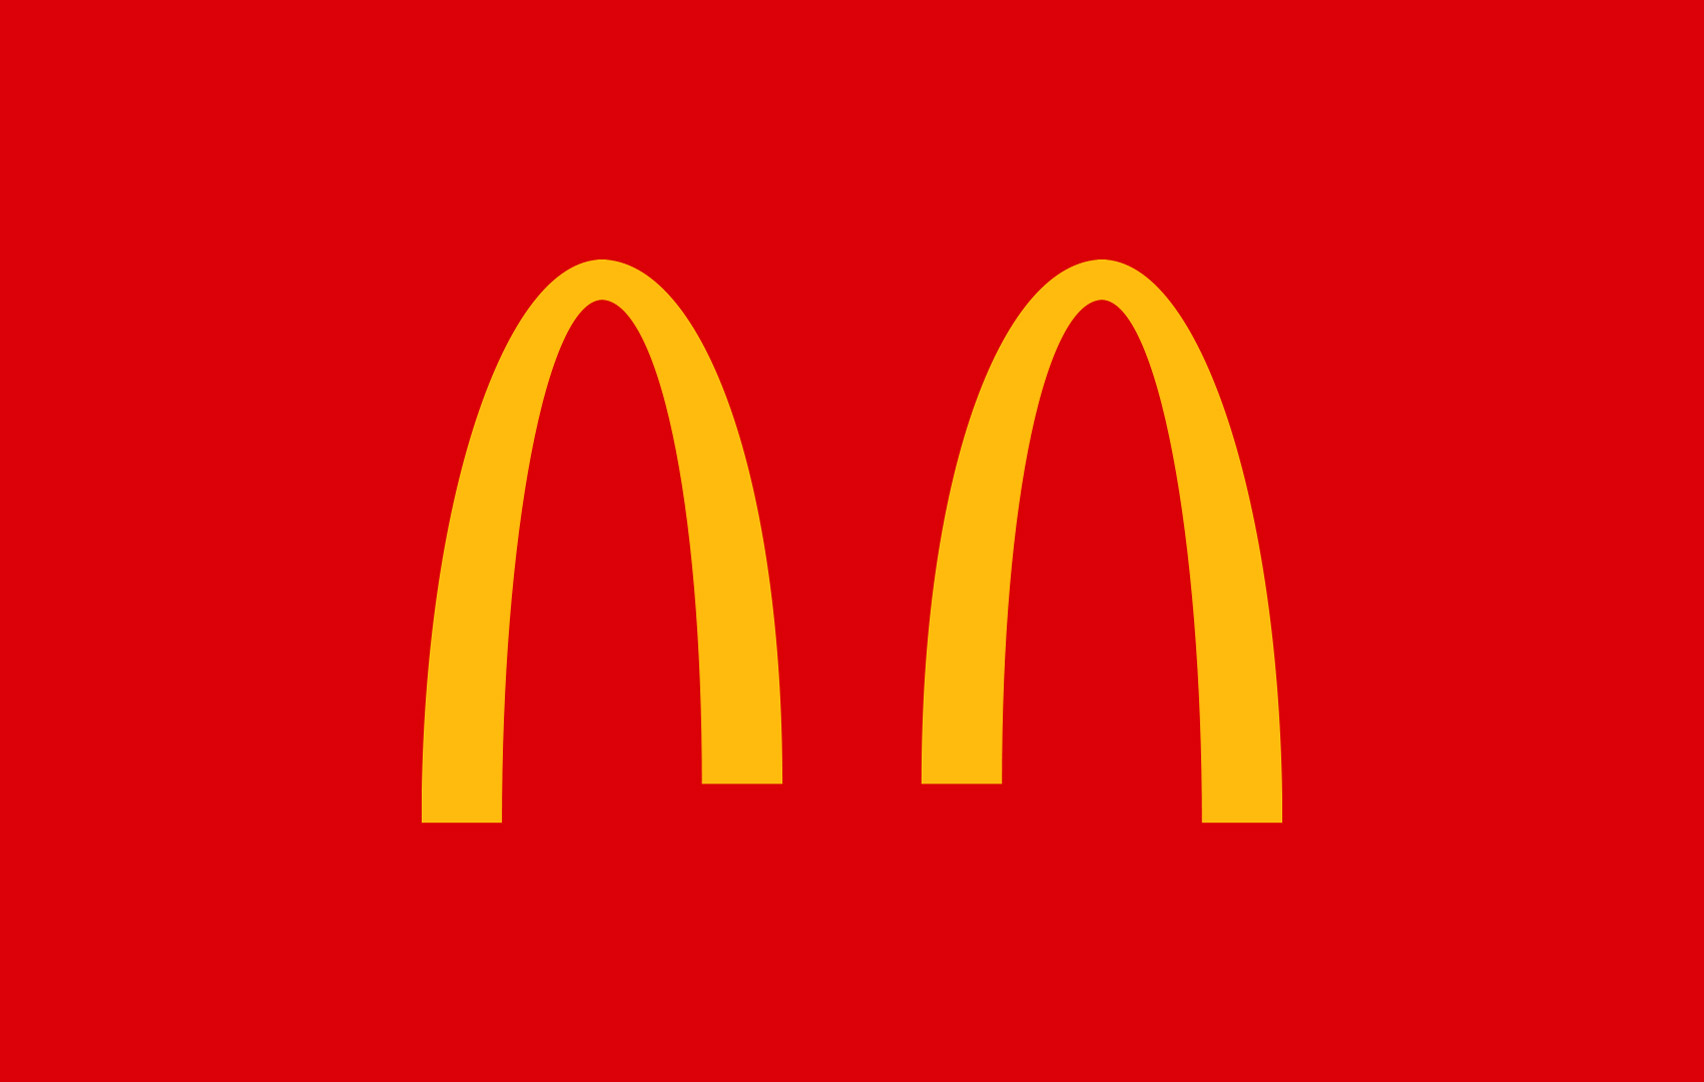 mcdonald's social distancing logo